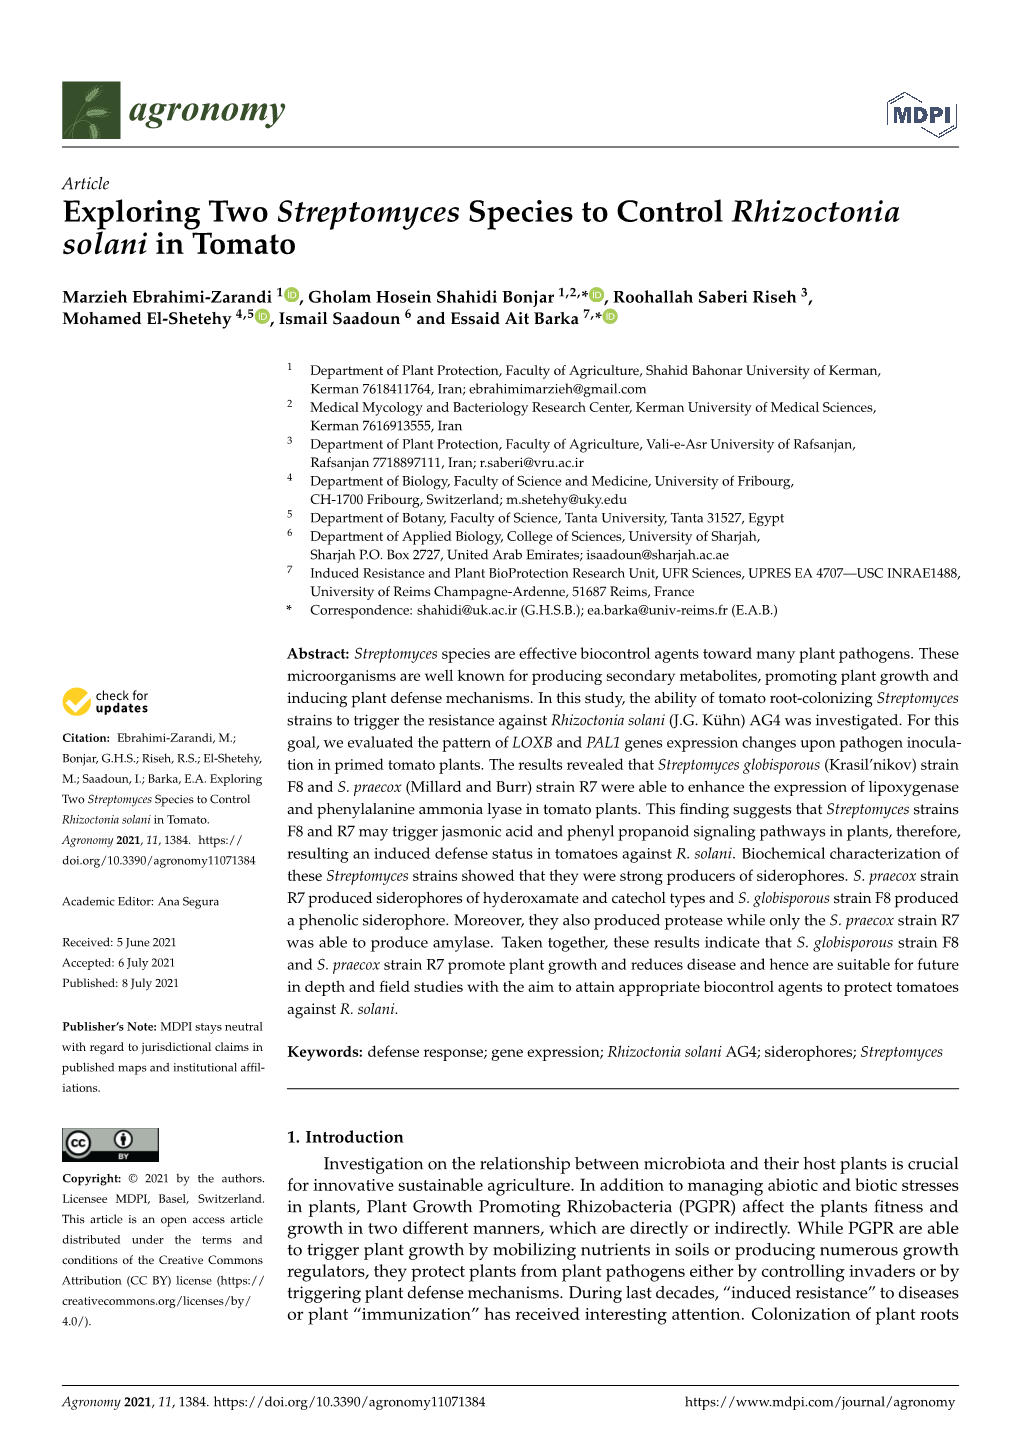 Exploring Two Streptomyces Species to Control Rhizoctonia Solani in Tomato